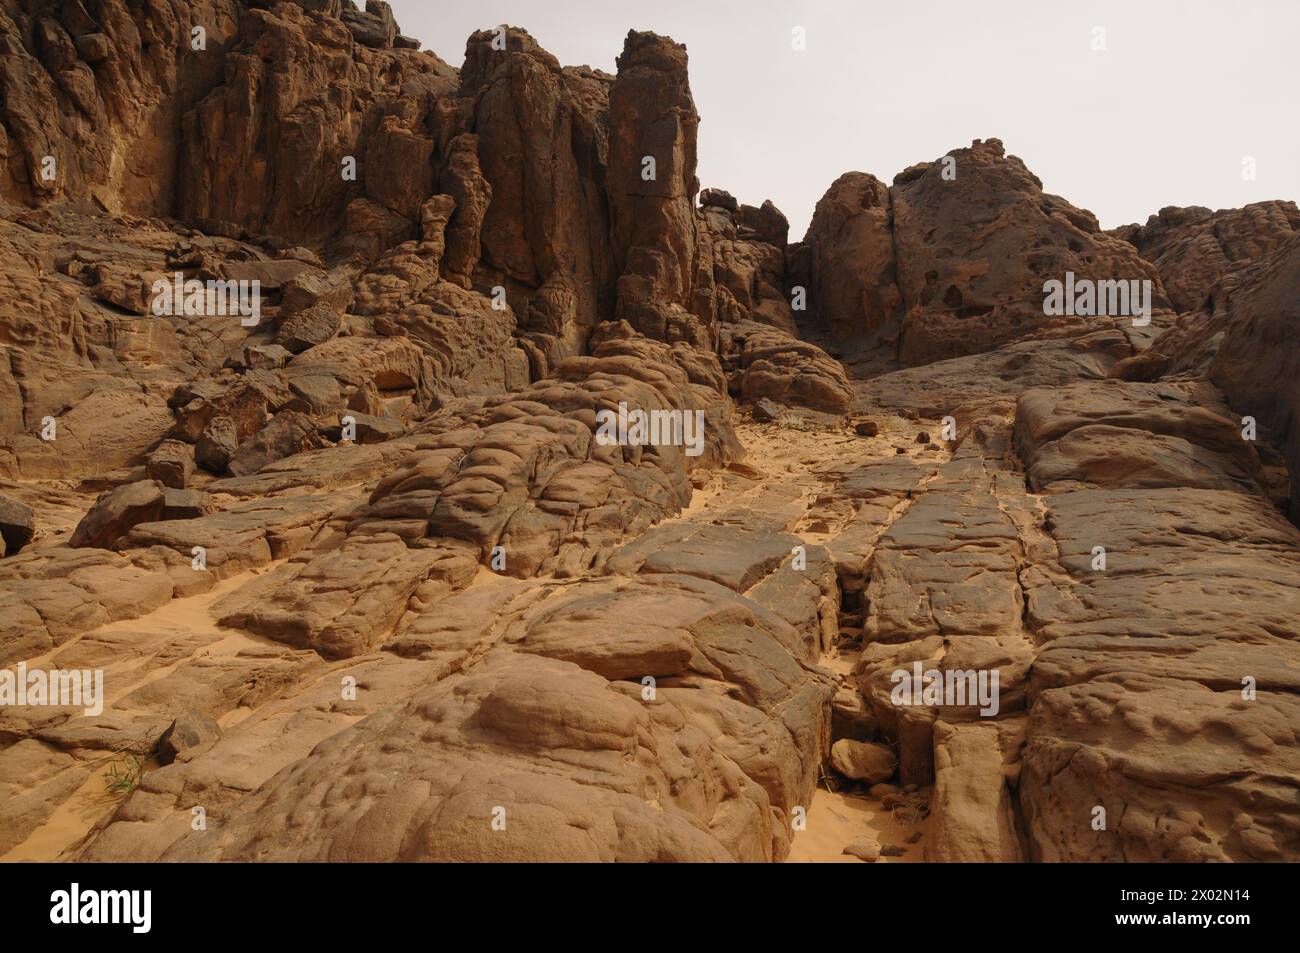 Bizarre Welt der seltsamen Felsformationen von Meghedet (Magatgat) (Meggedet), Fezzan, Libyen, Nordafrika, Afrika Stockfoto